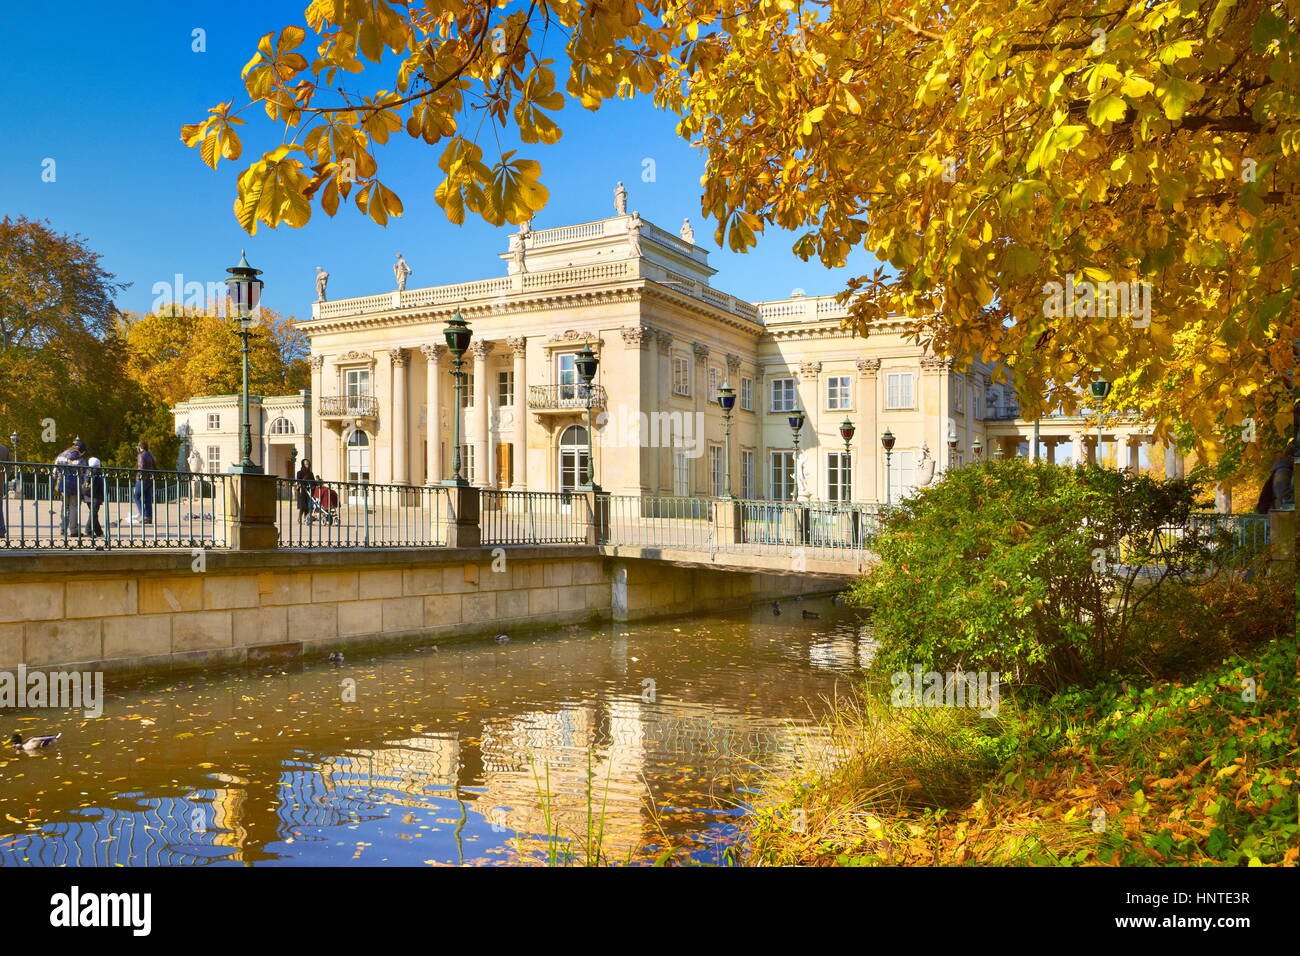 Royal Palace, Lazienki Park in autumn colors, Warsaw, Poland Stock Photo